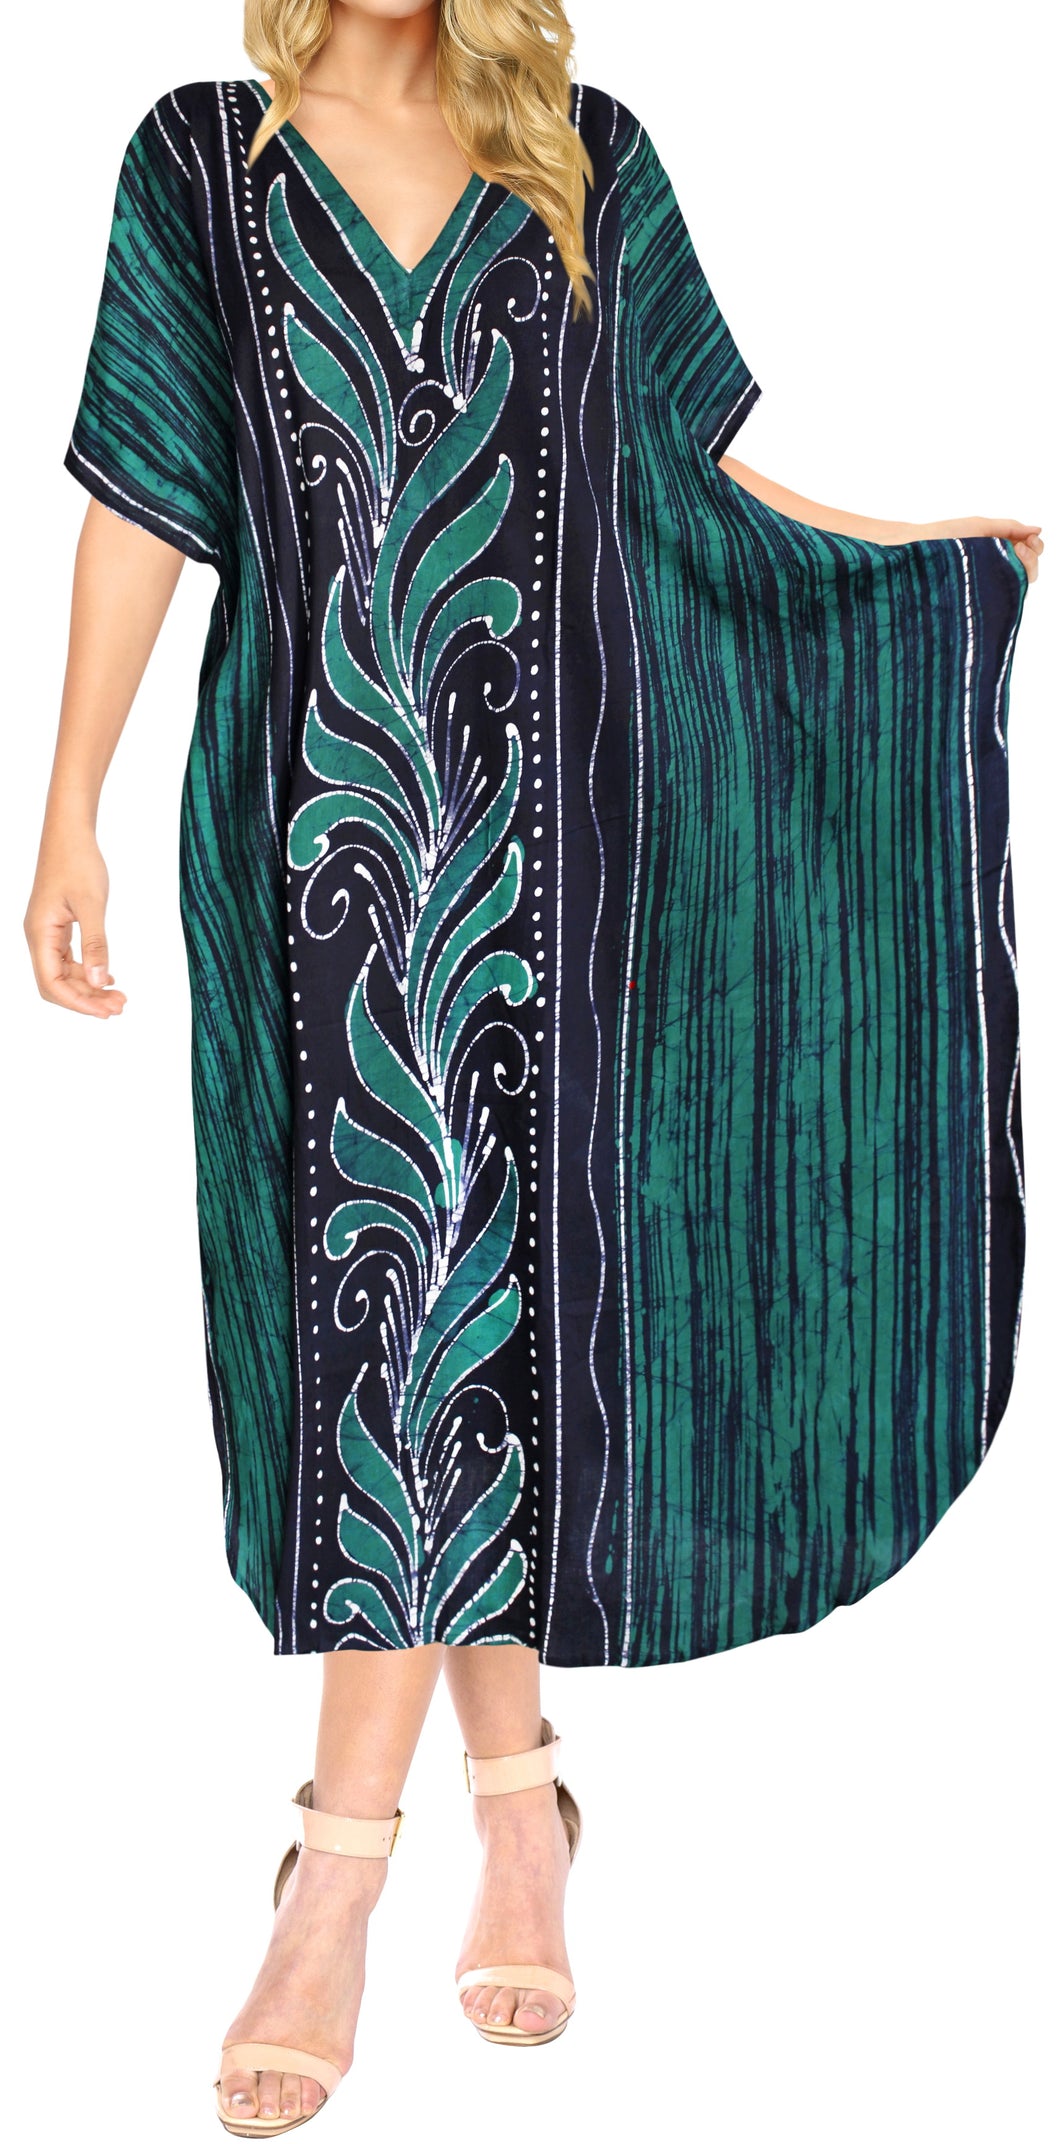 la-leela-100-cotton-batik-womens-kaftan-kimono-summer-beachwear-cover-up-dress-OSFM 14-18W [L- 2X]-Green_B233